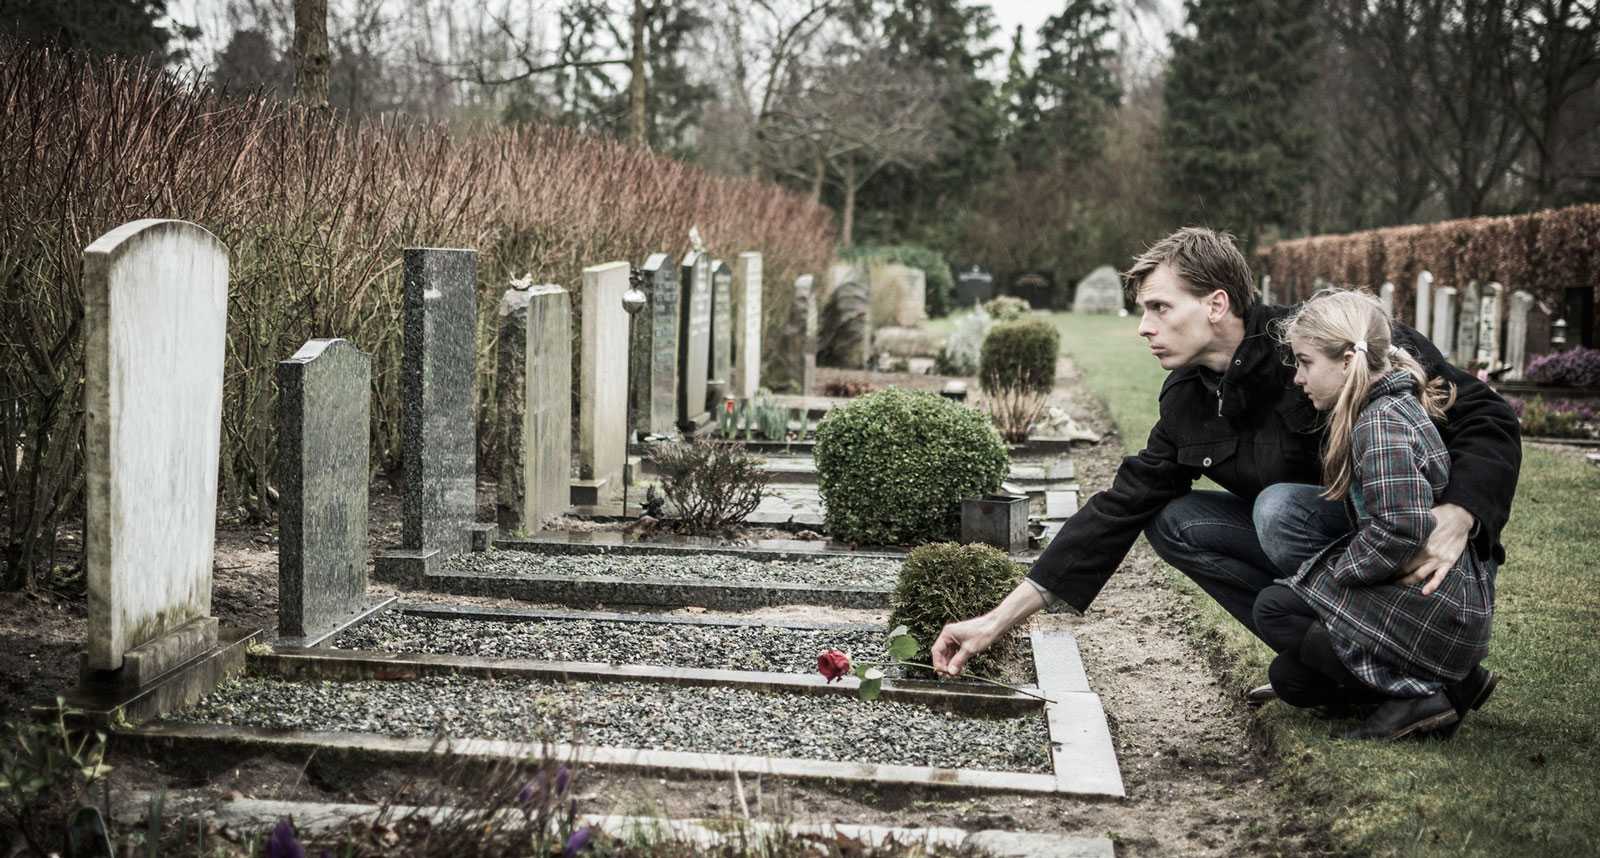 Можно приехать на кладбище. Эджвербери Лэйн кладбище. Мужчина и женщина на кладбище. Фотосессия на кладбище.